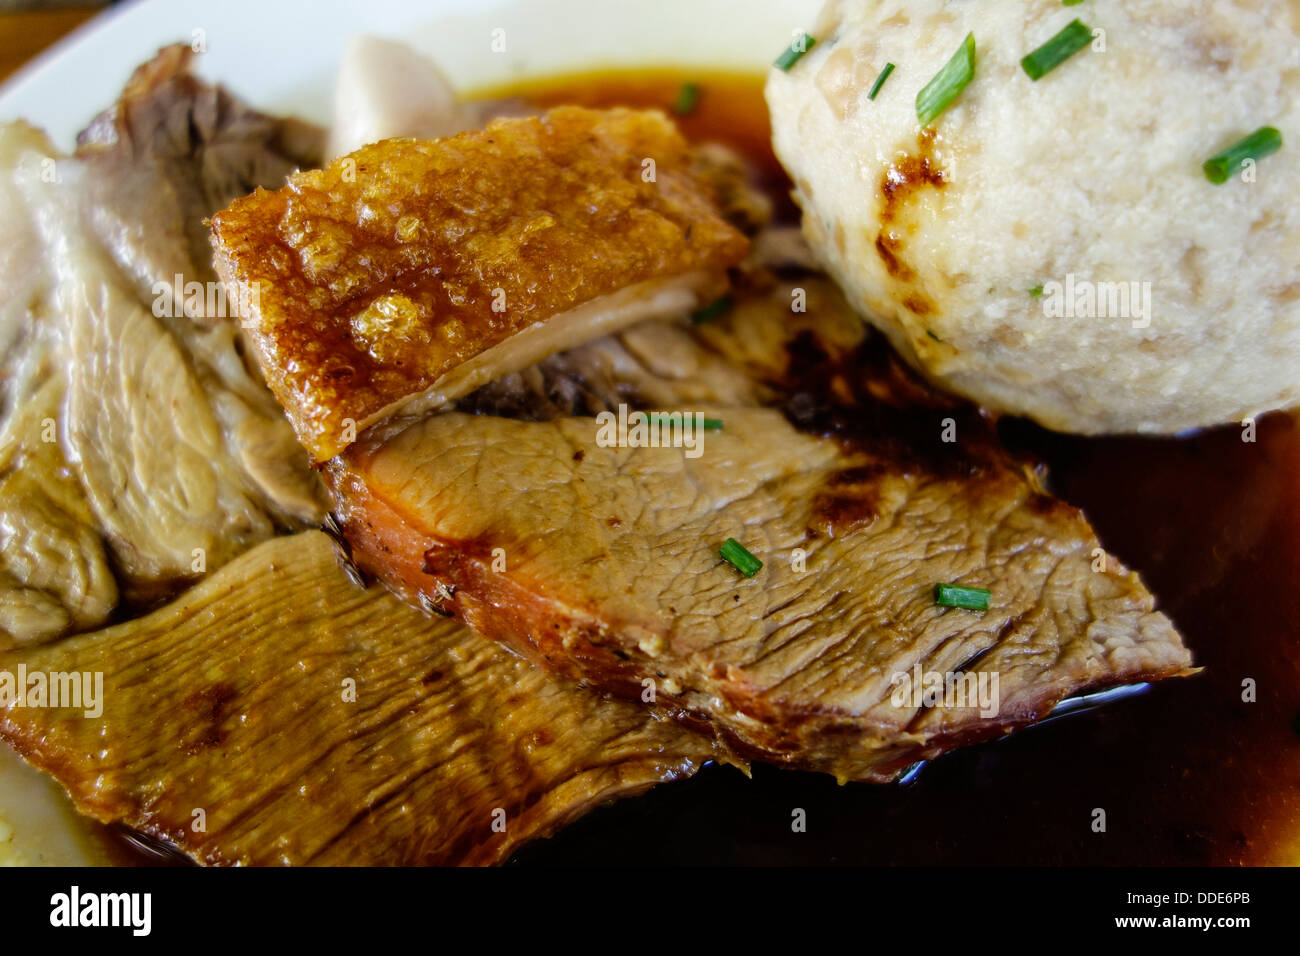 Bavarian roast pork with crackling and dumplings Stock Photo